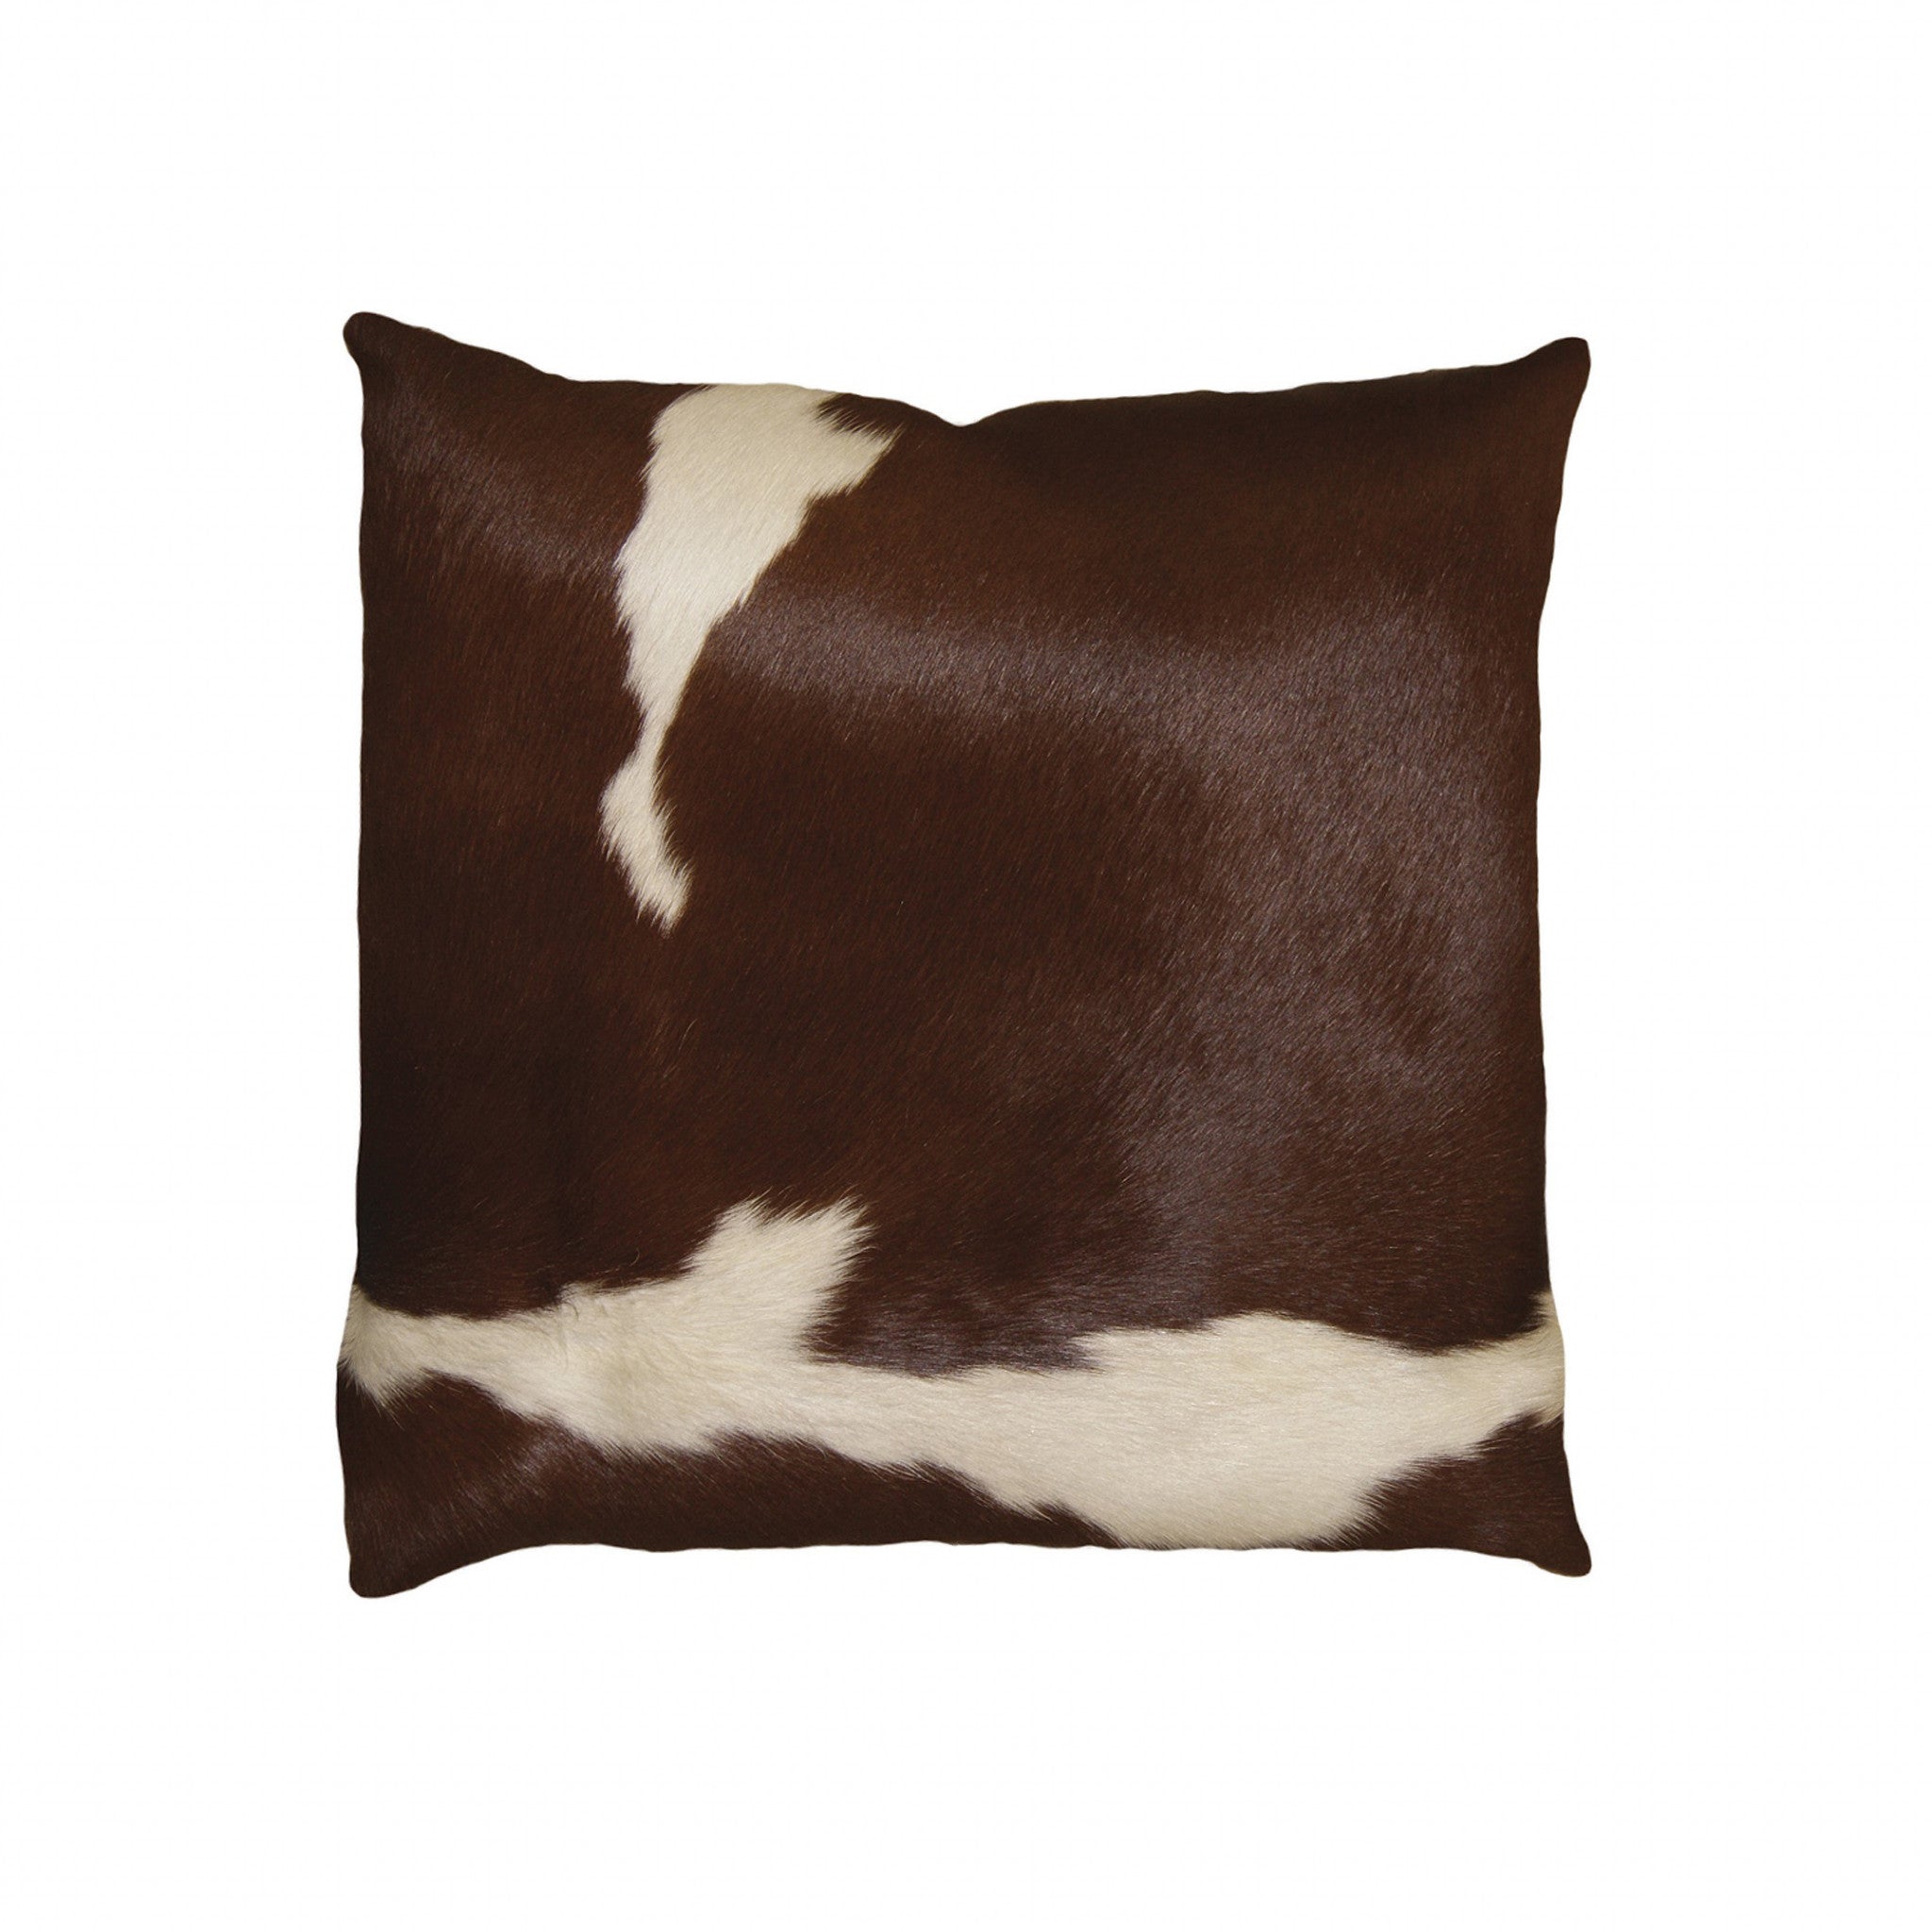 18" X 18" X 5" Chocolate Cowhide  Pillow